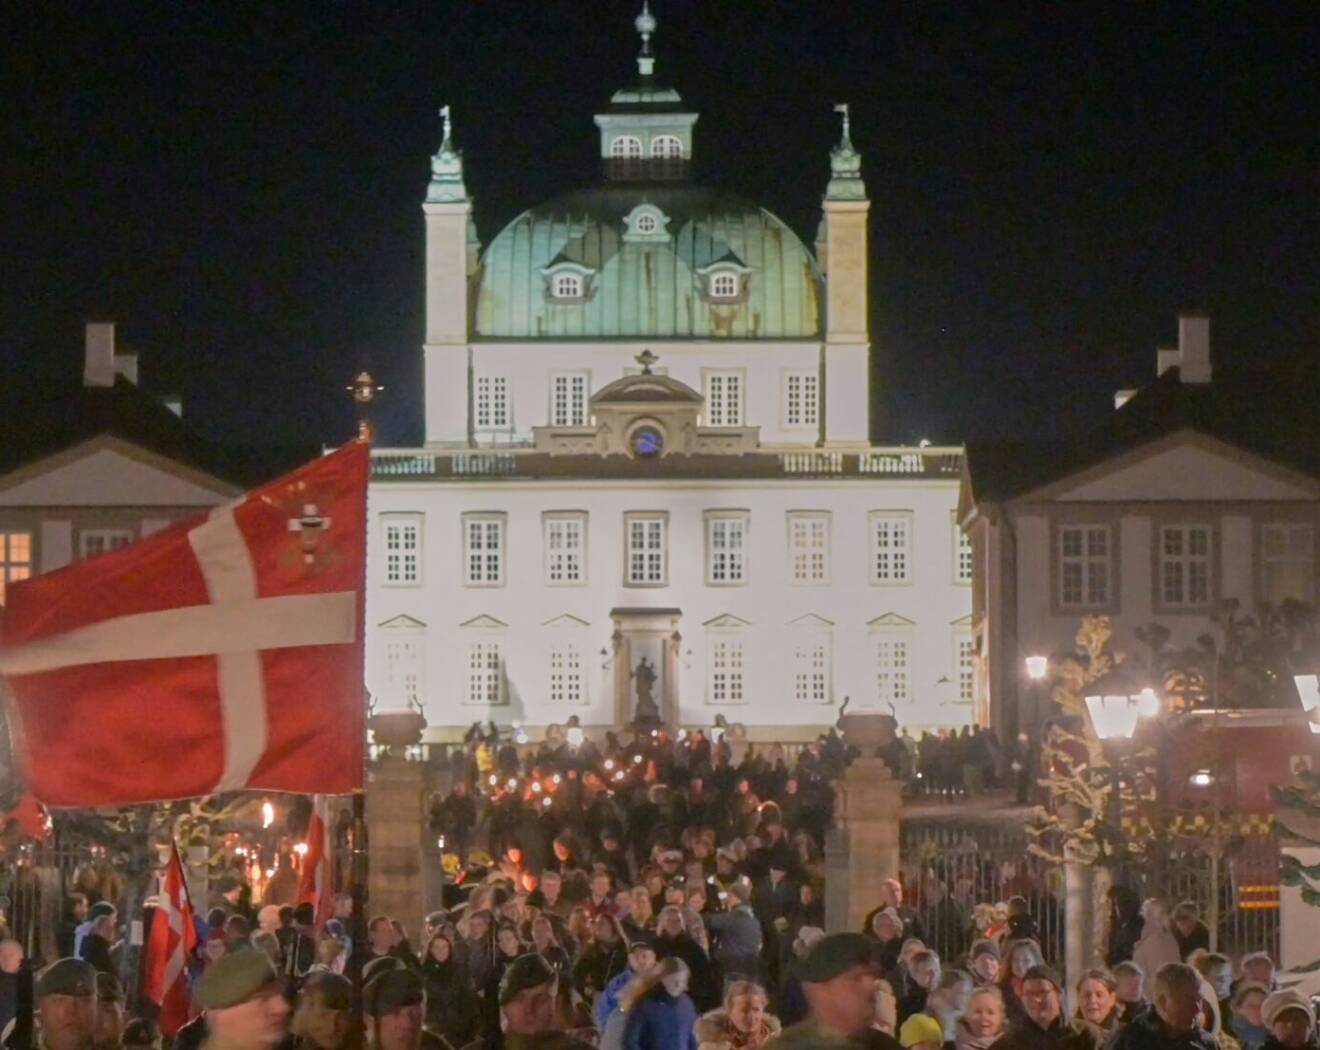 Drottning Margrethe firades med fackeltåg på Fredensborgs slott